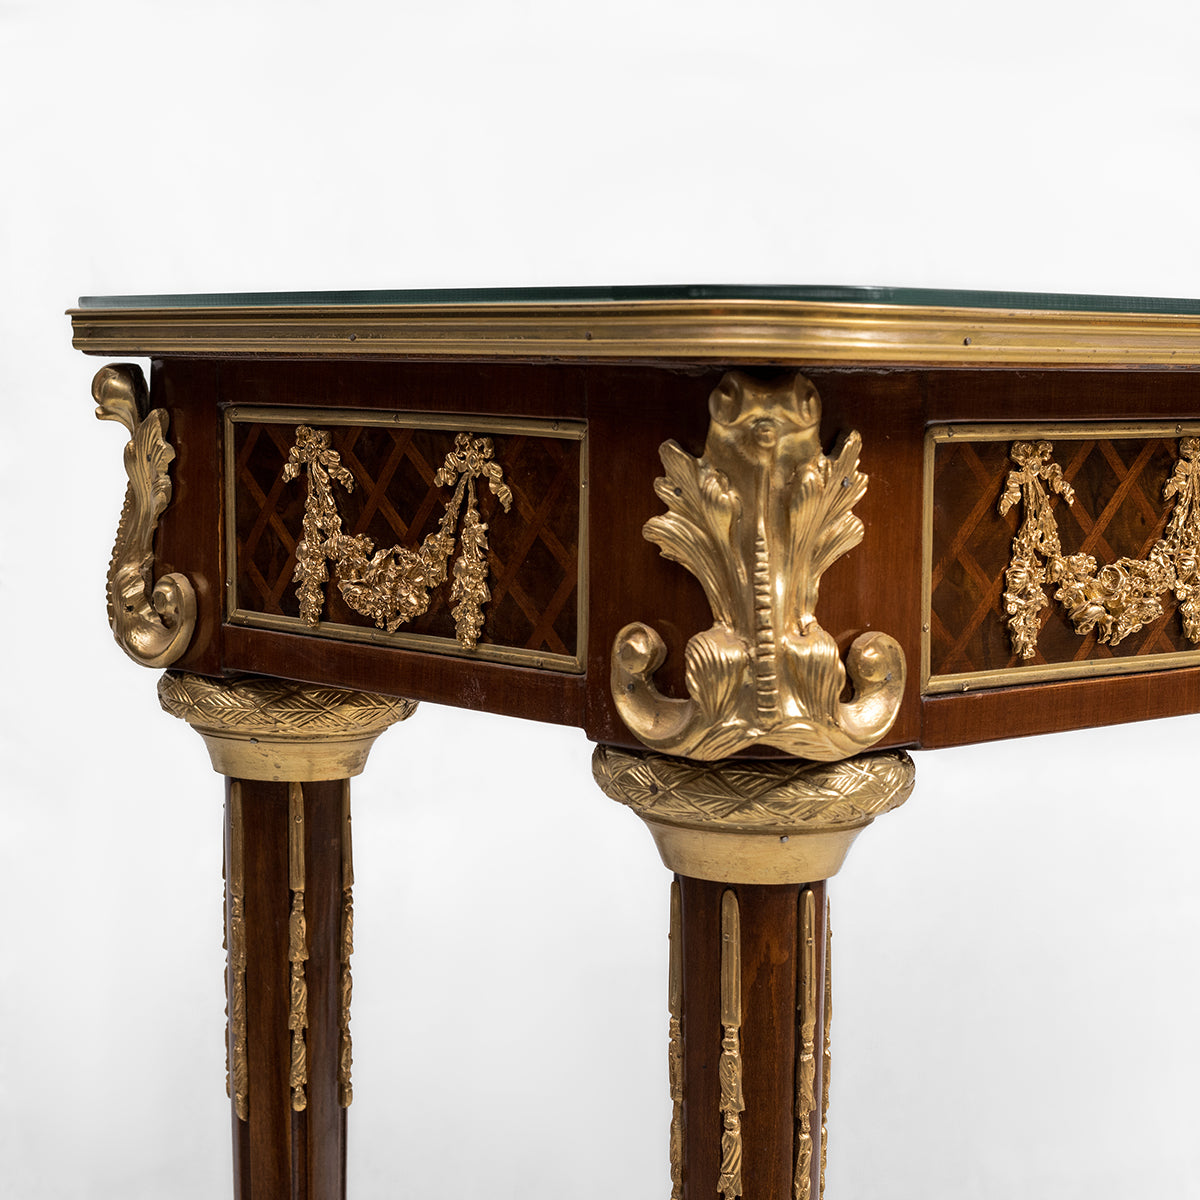 Louis XVI style ormolu mounted console table